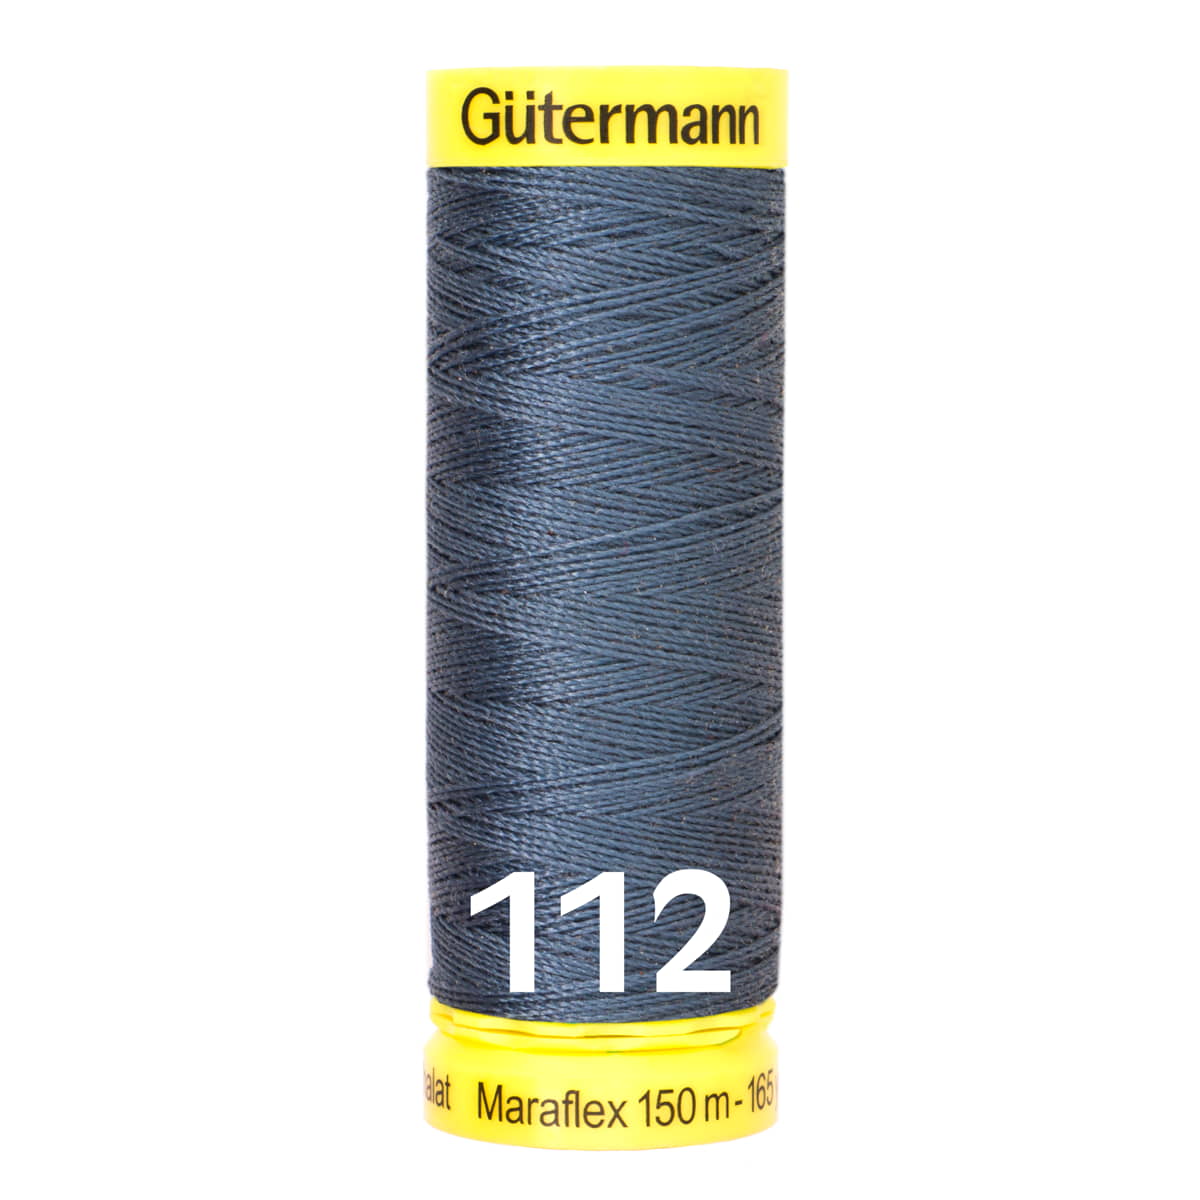 Gütermann MaraFlex 150m - 112 jeans blauw GUTERMANN-MARAFLEX-150-112 4029394999116 - Fourniturenkraam.nl